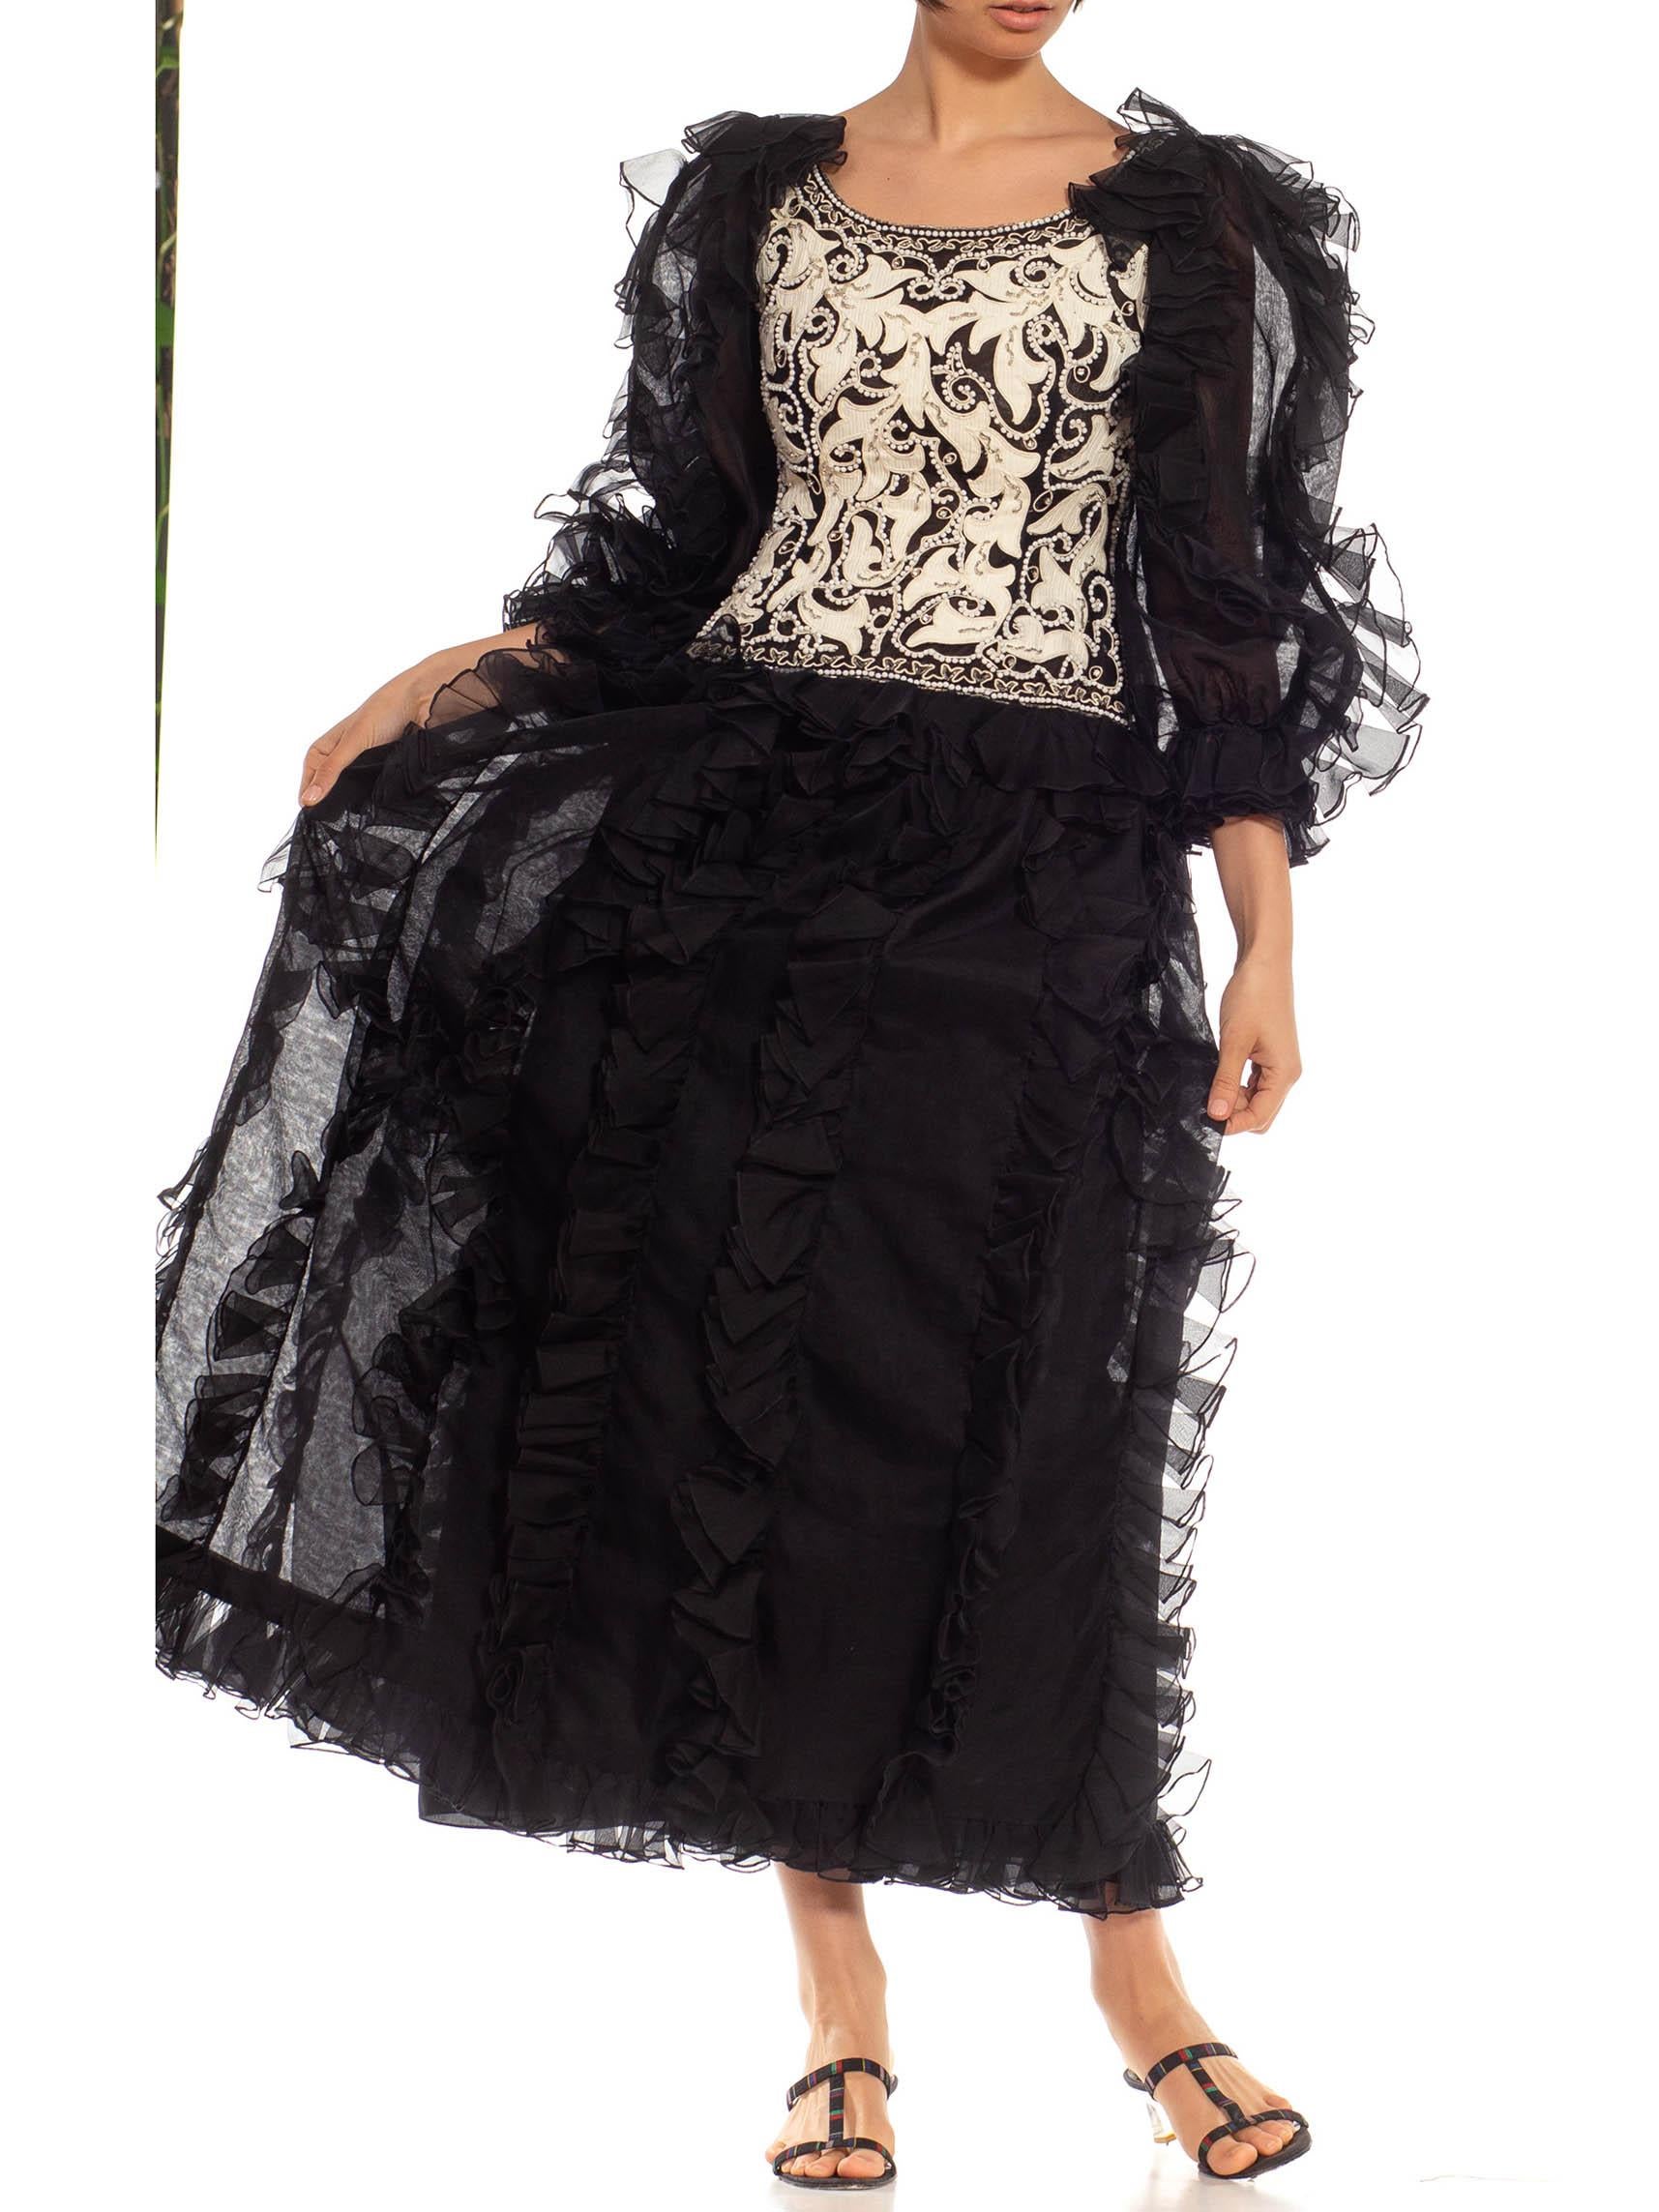 1980S OSCAR DE LA RENTA Black & White Silk Beaded Ruffle Gown With Giant Sleeves For Sale 2